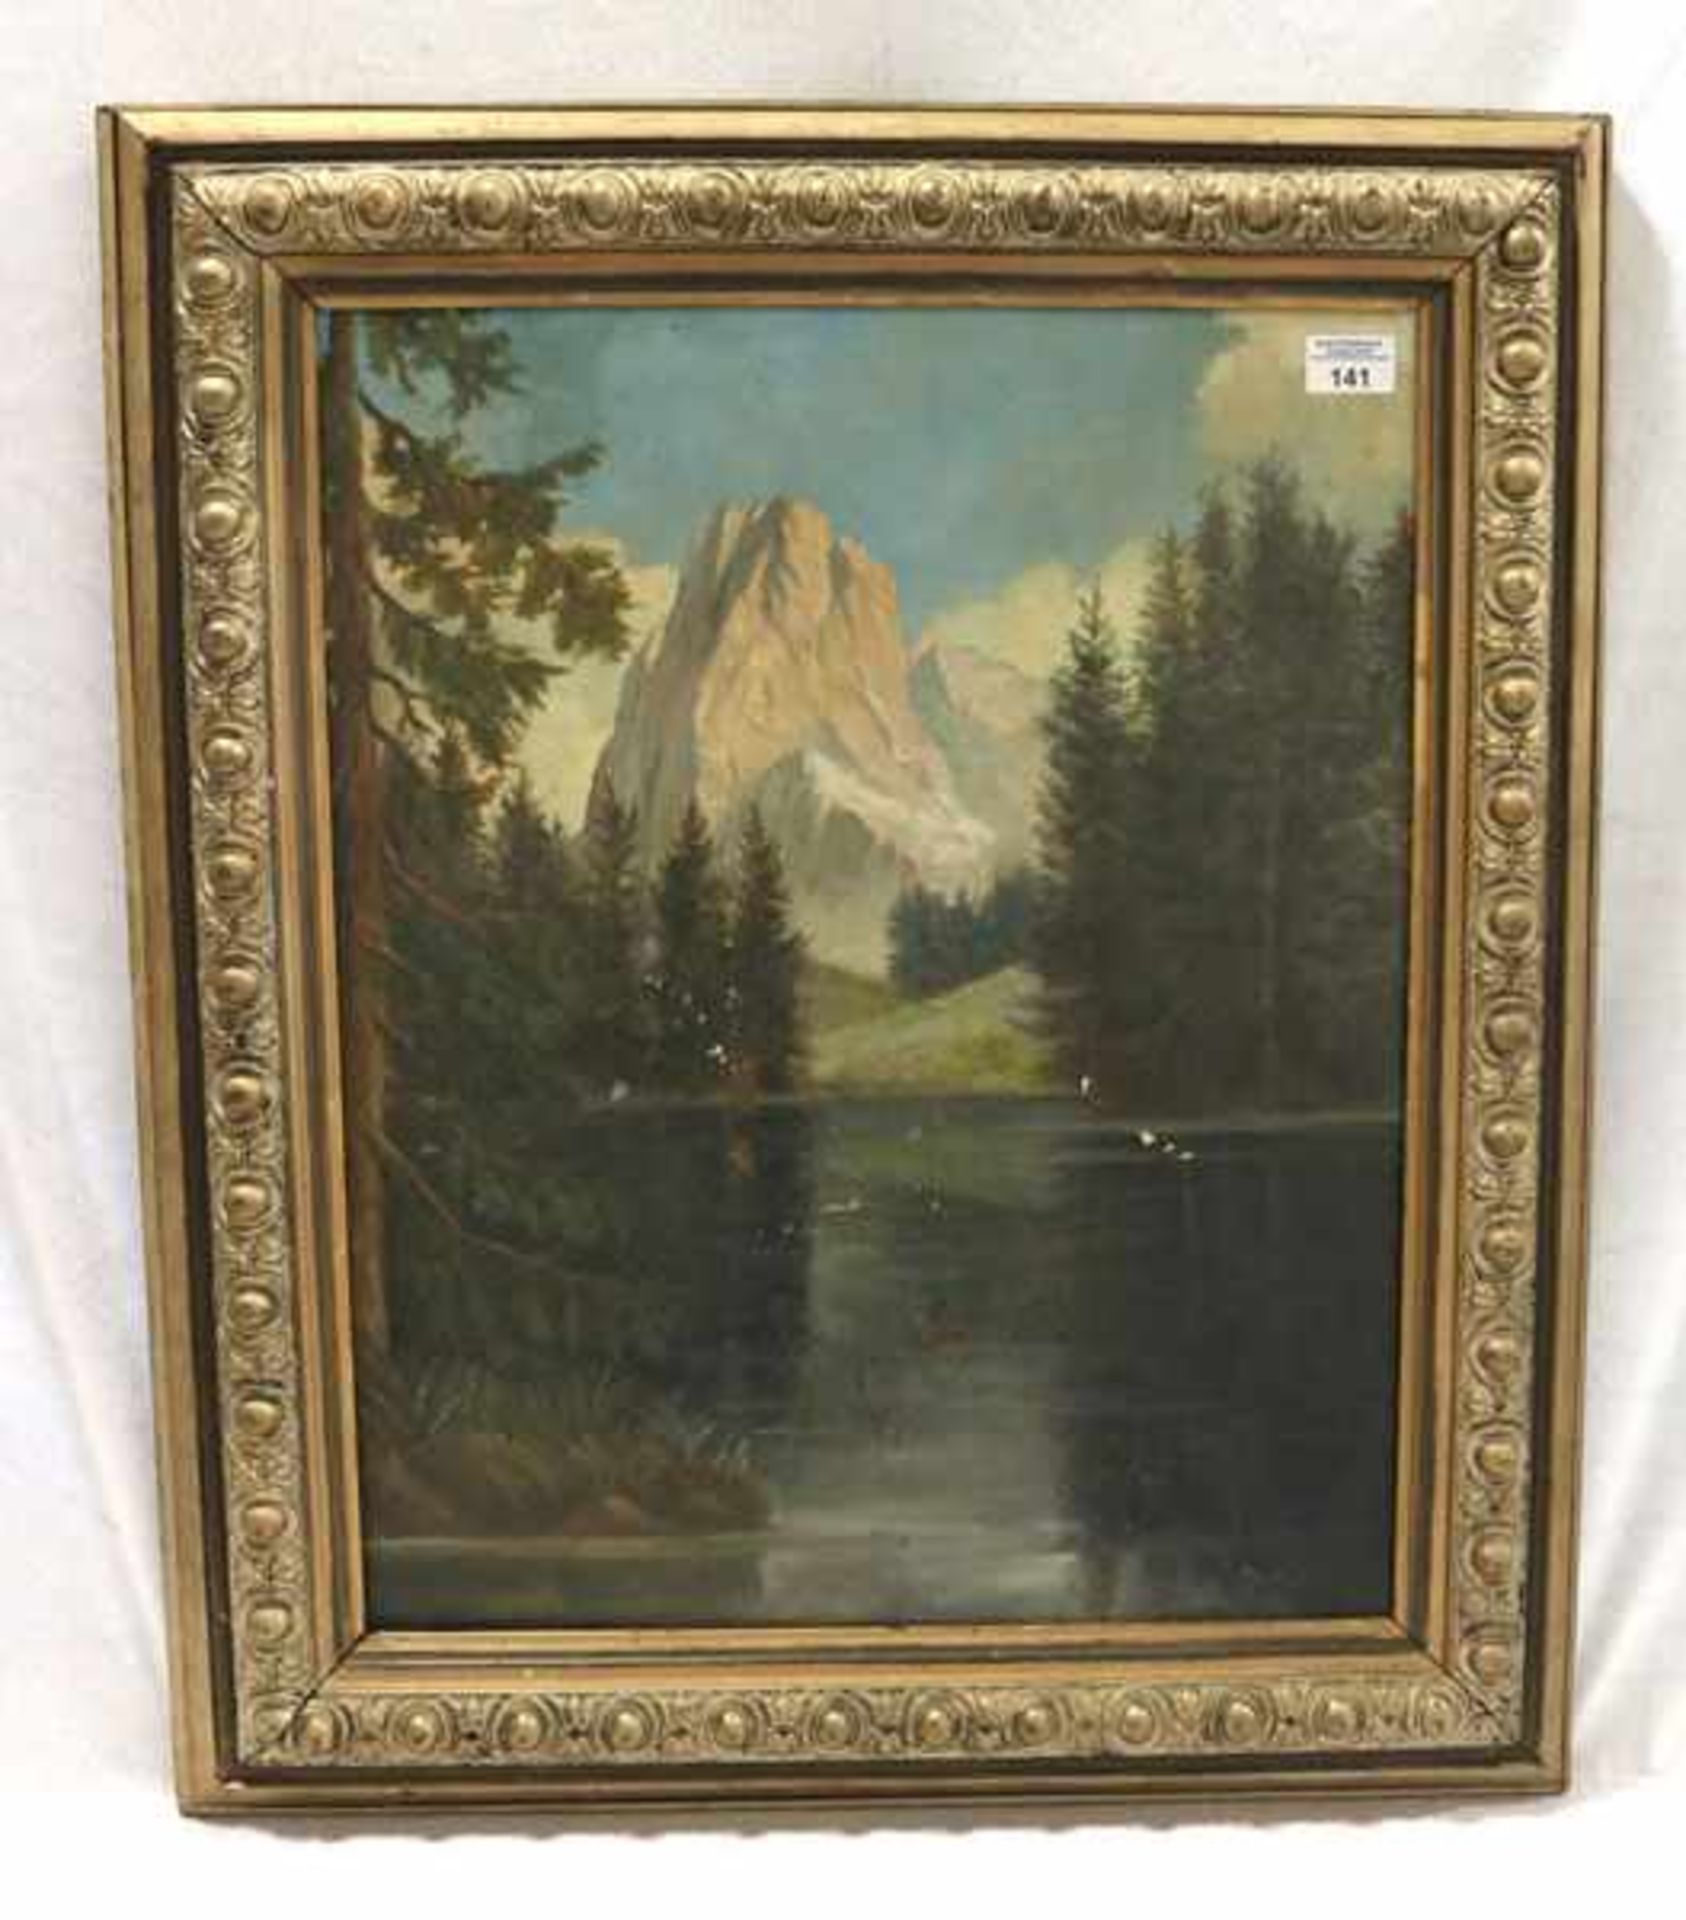 Gemälde ÖL/LW 'See im Hochgebirge', signiert Becker, LW beschädigt, gerahmt, Rahmen bestossen, incl.